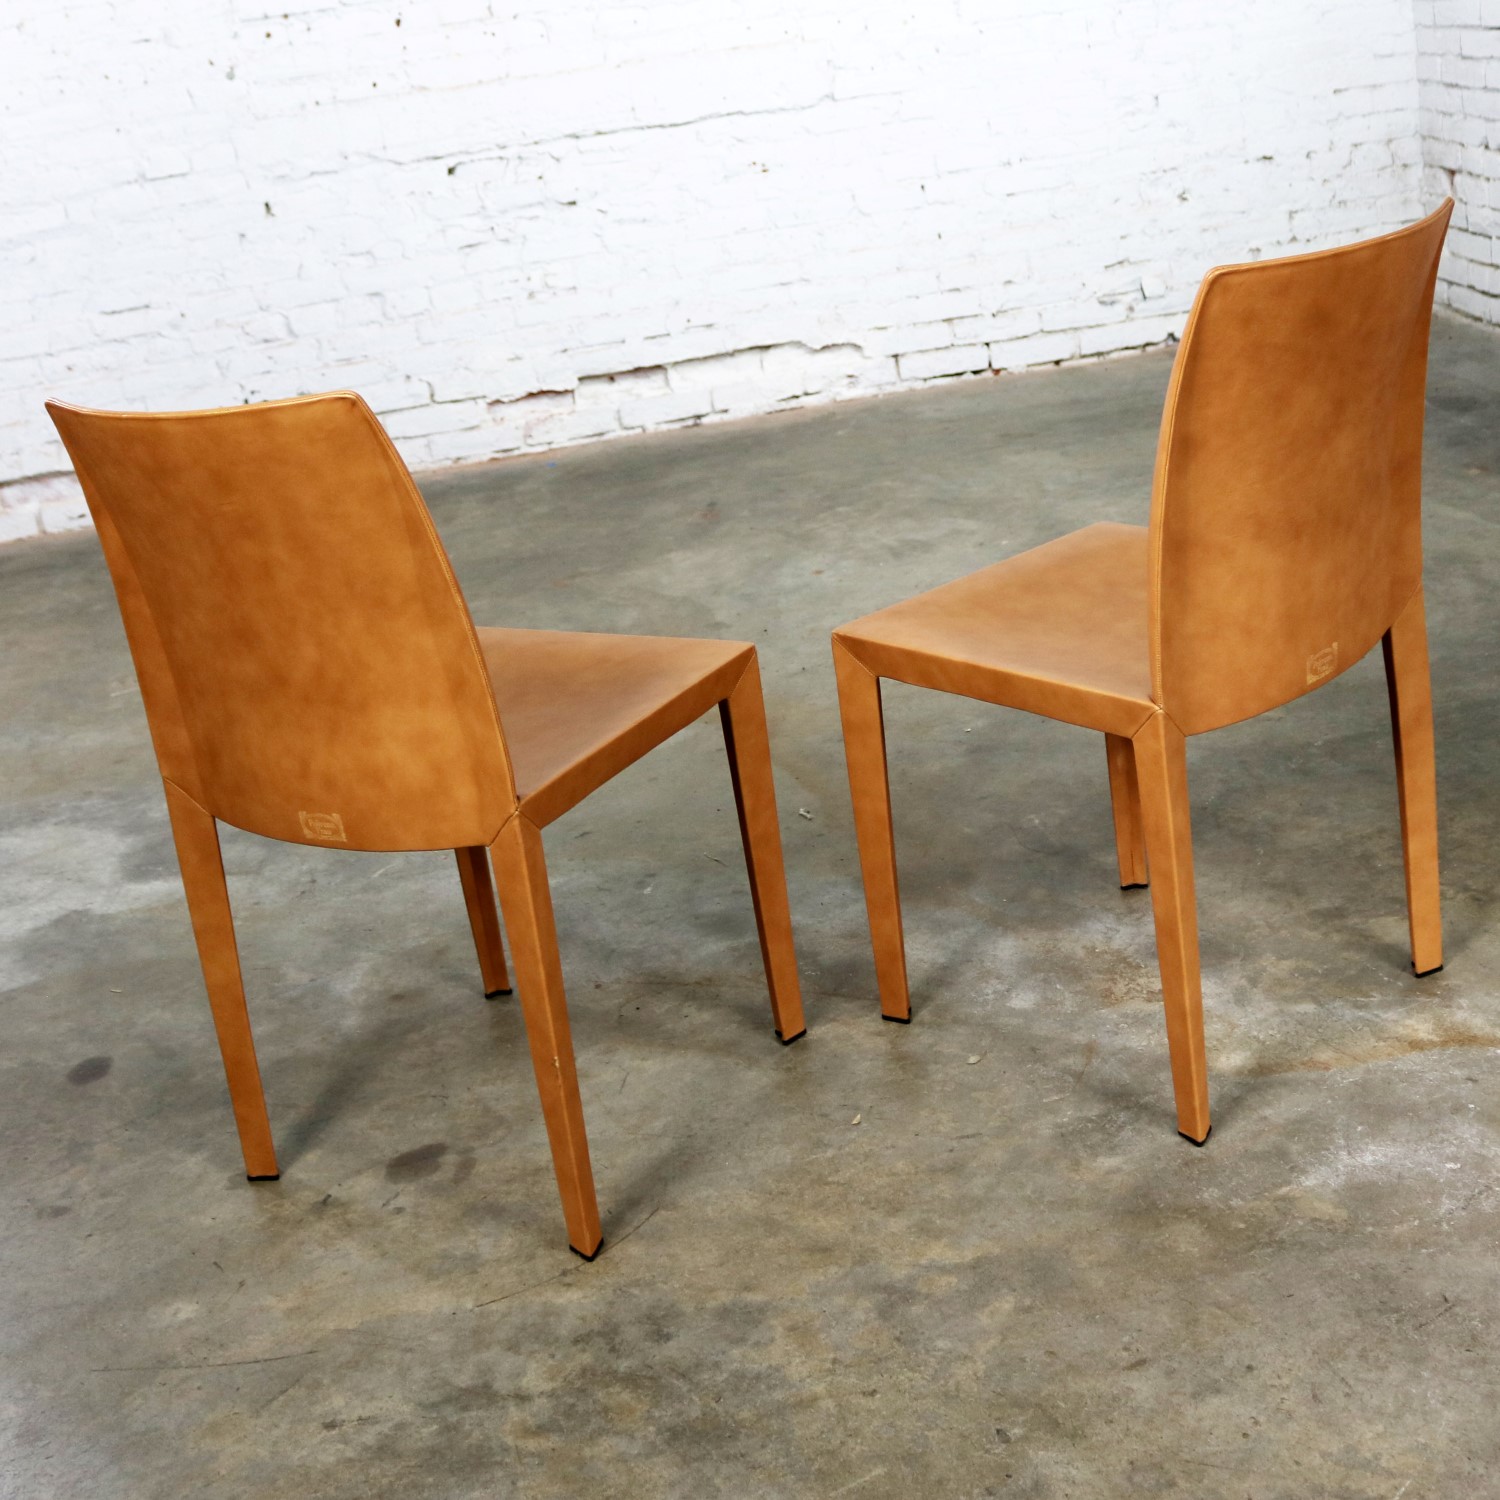 Pair Poltrona Frau Lola Dining Side Chairs by Pierluigi Cerri Vintage Cognac Leather